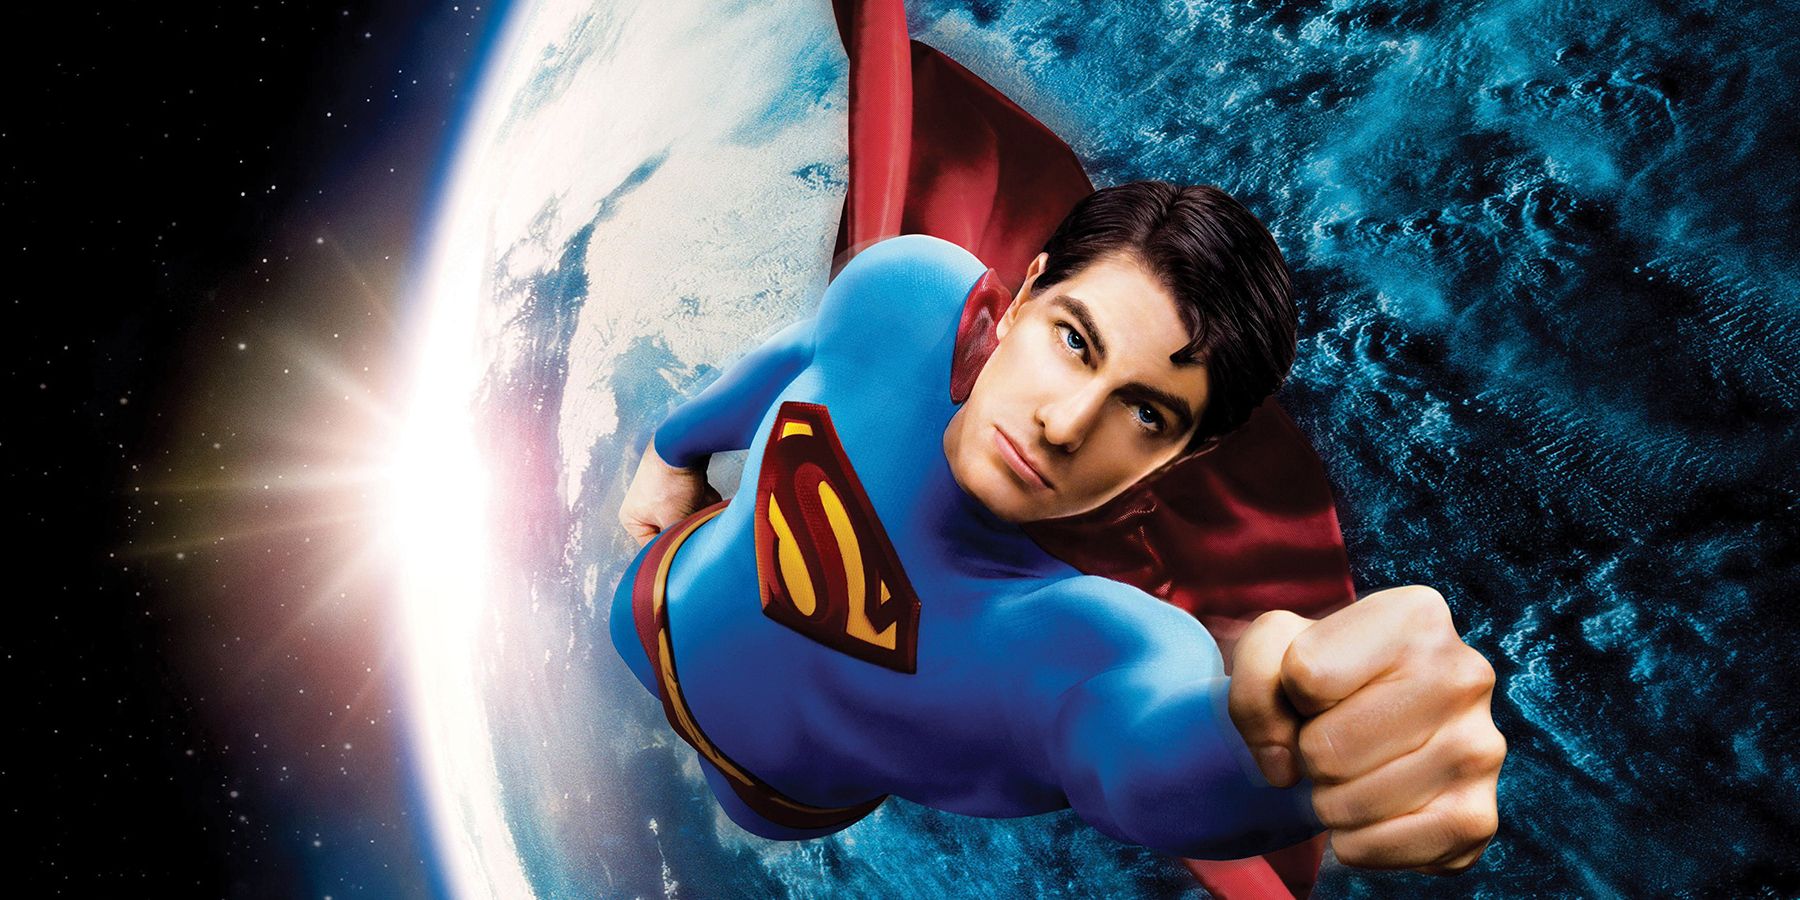 Superman flies into space in Superman Returns